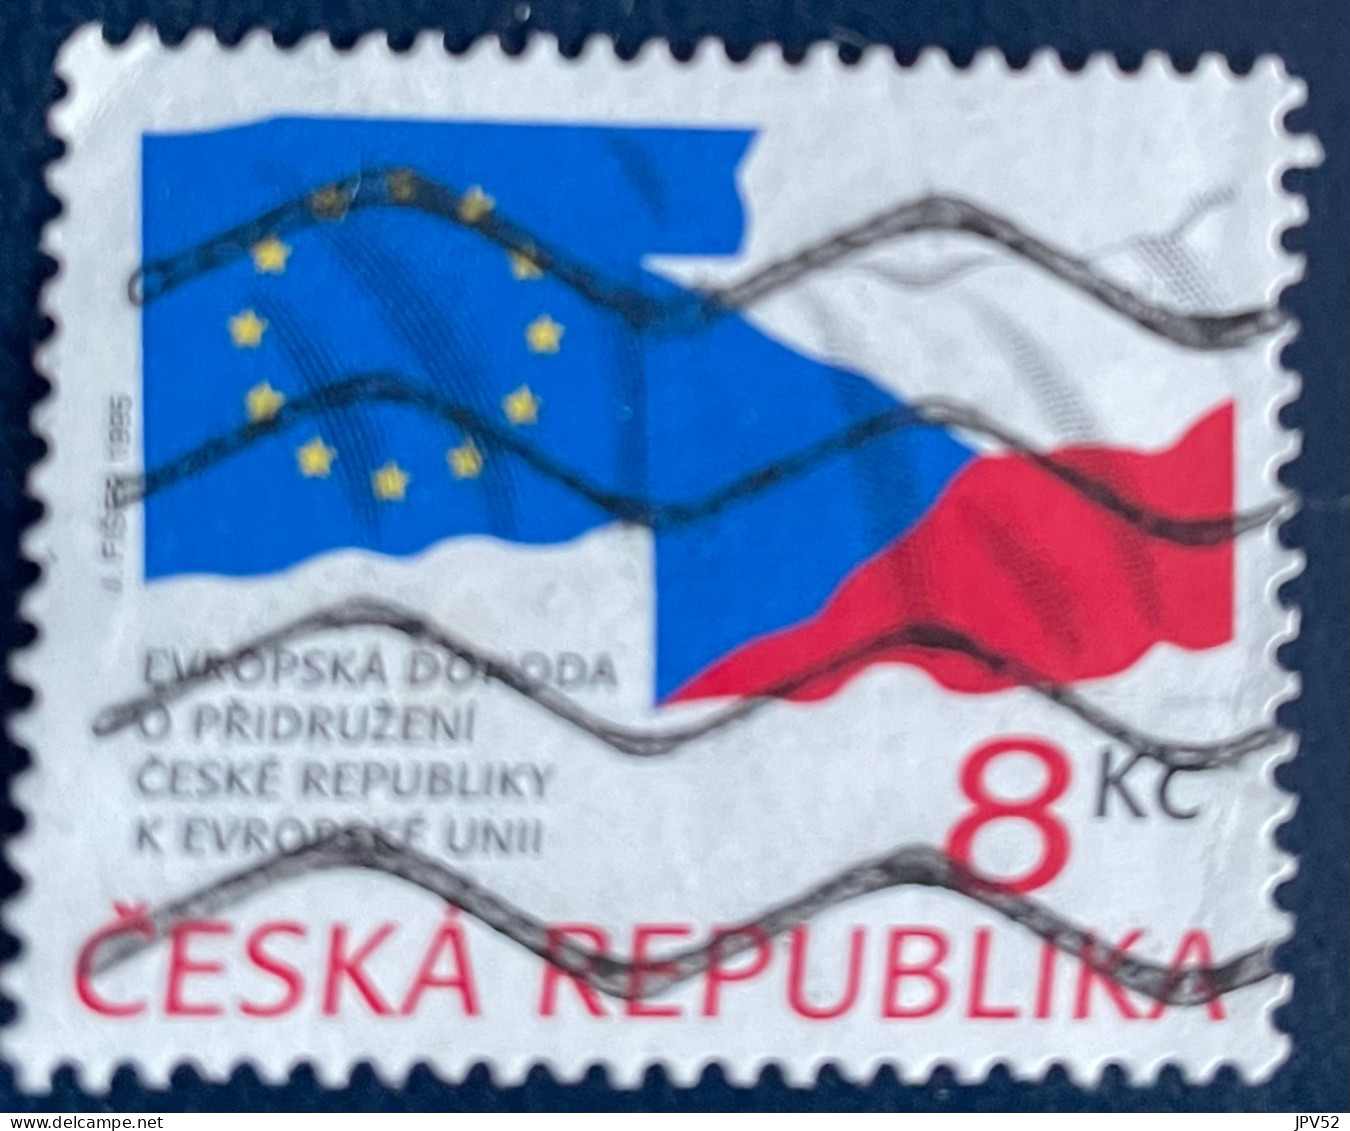 Ceska Republika - Tsjechië - C4/4 - 1995 - (°)used - Michel 62 - Tsjechië Lid Va EU - Gebruikt